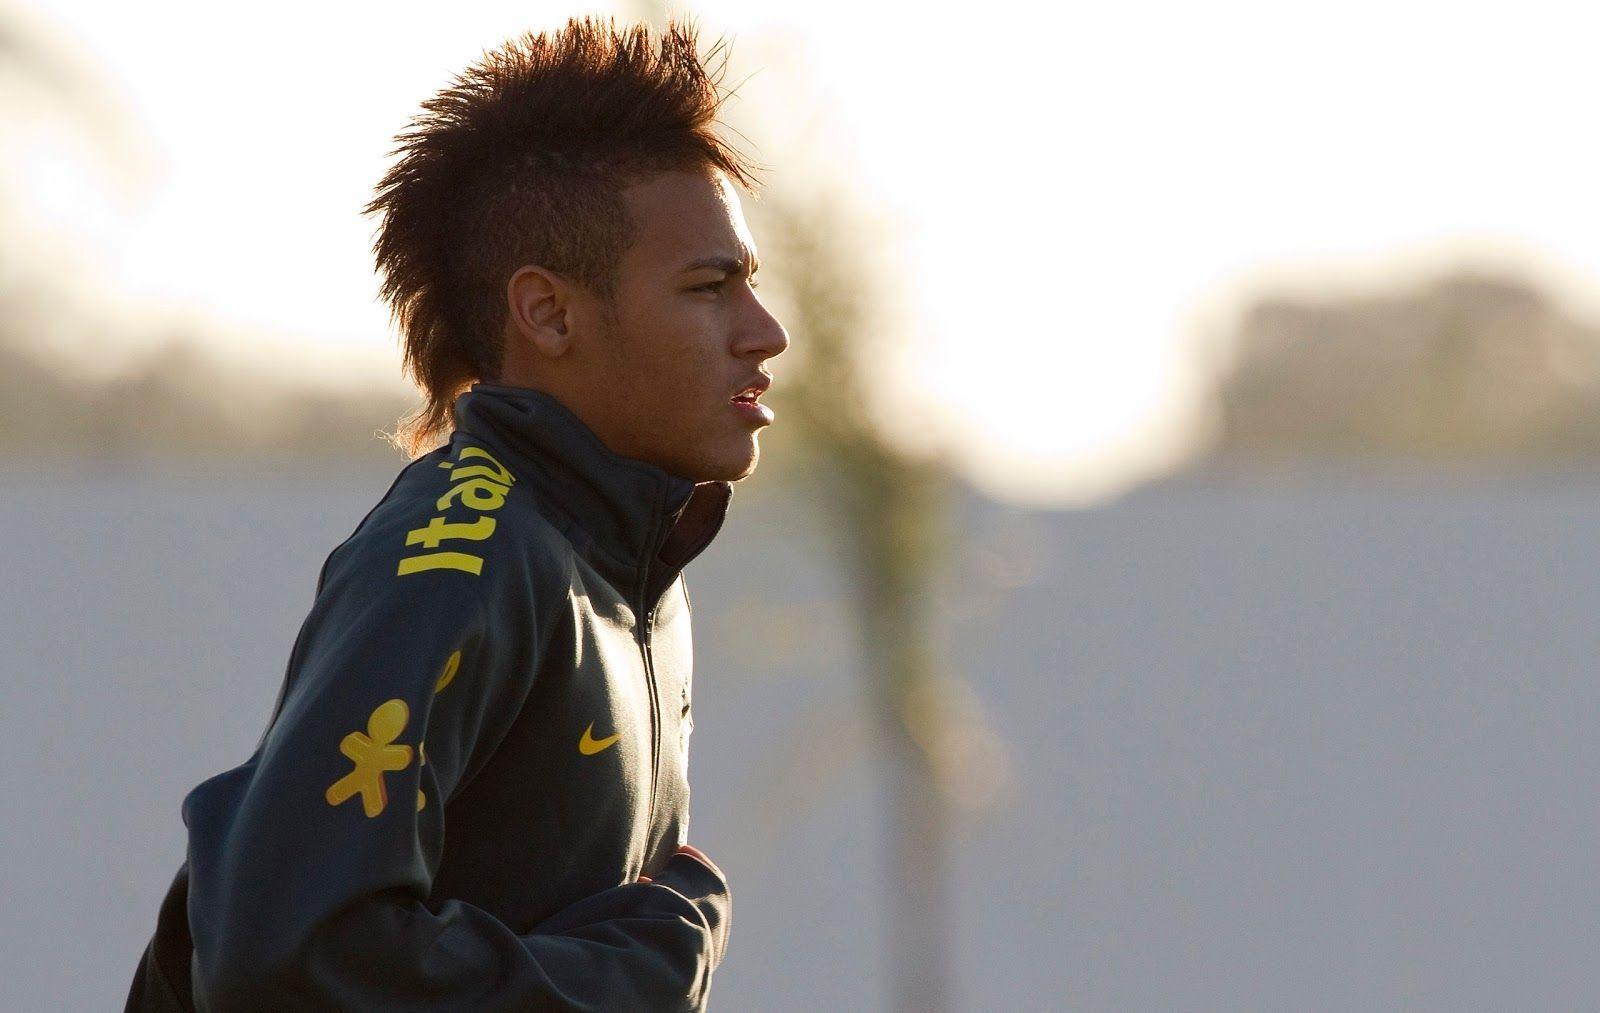 Neymar Da Silva Hairstyle Related Keywords & Suggestions